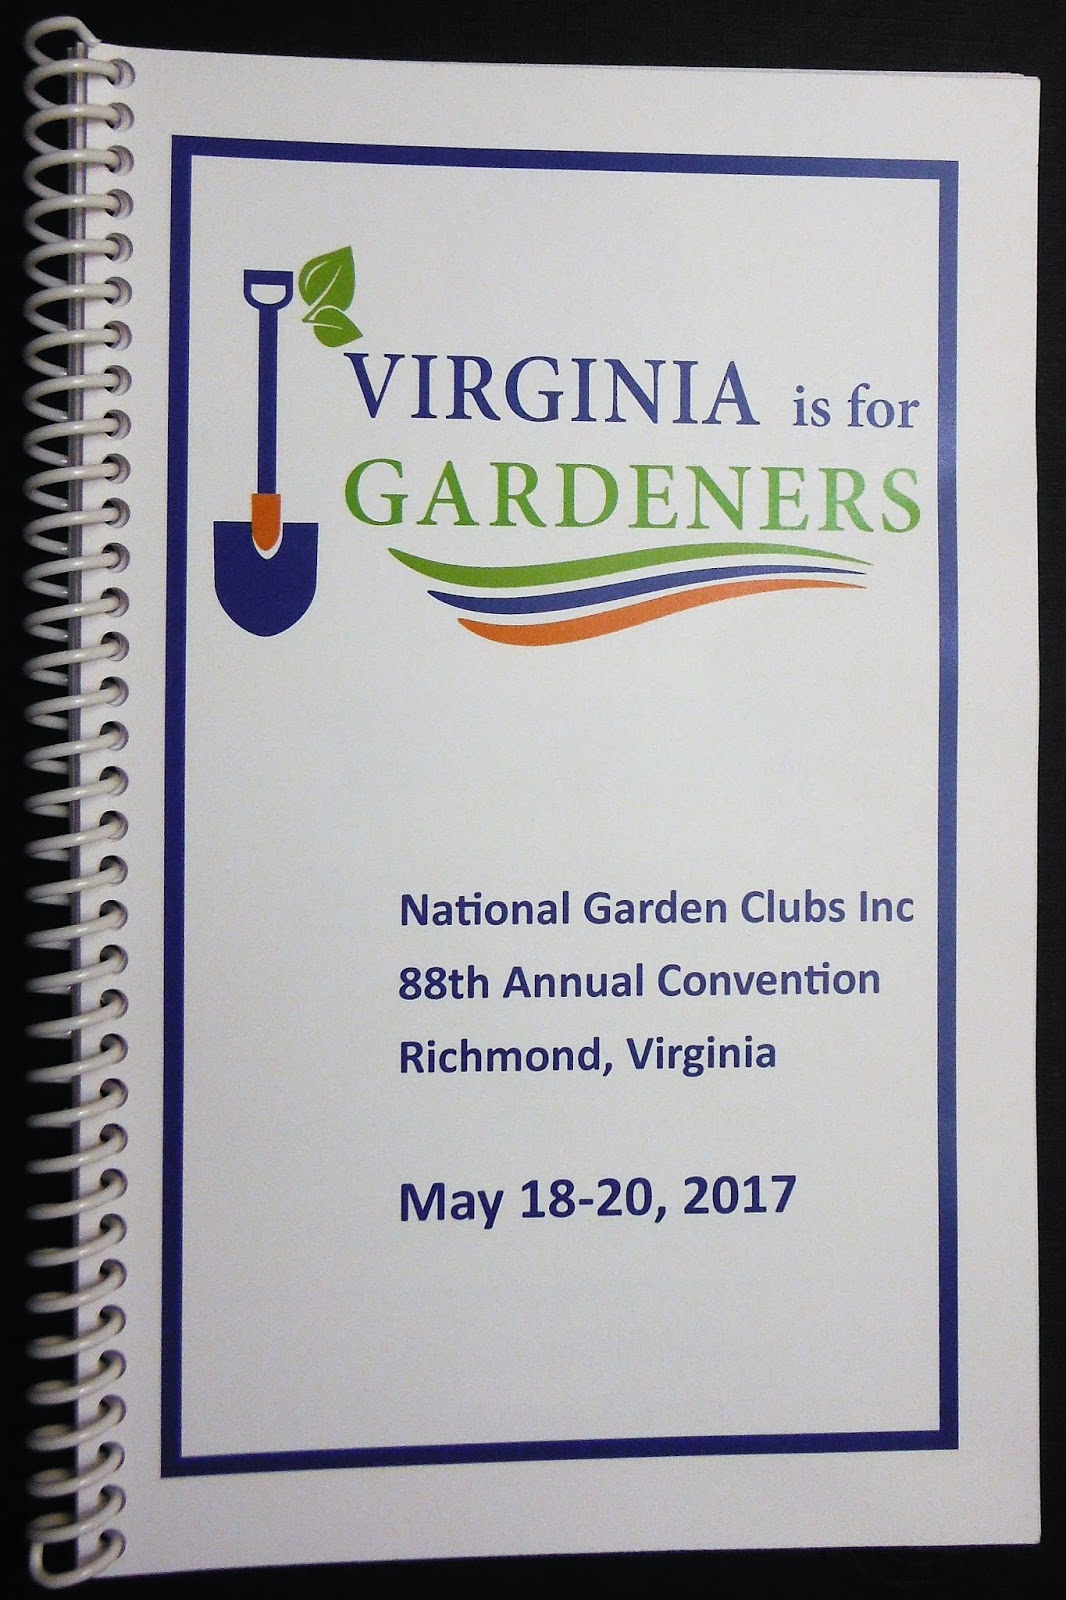 The Principal Undergardener The National Garden Clubs Convention